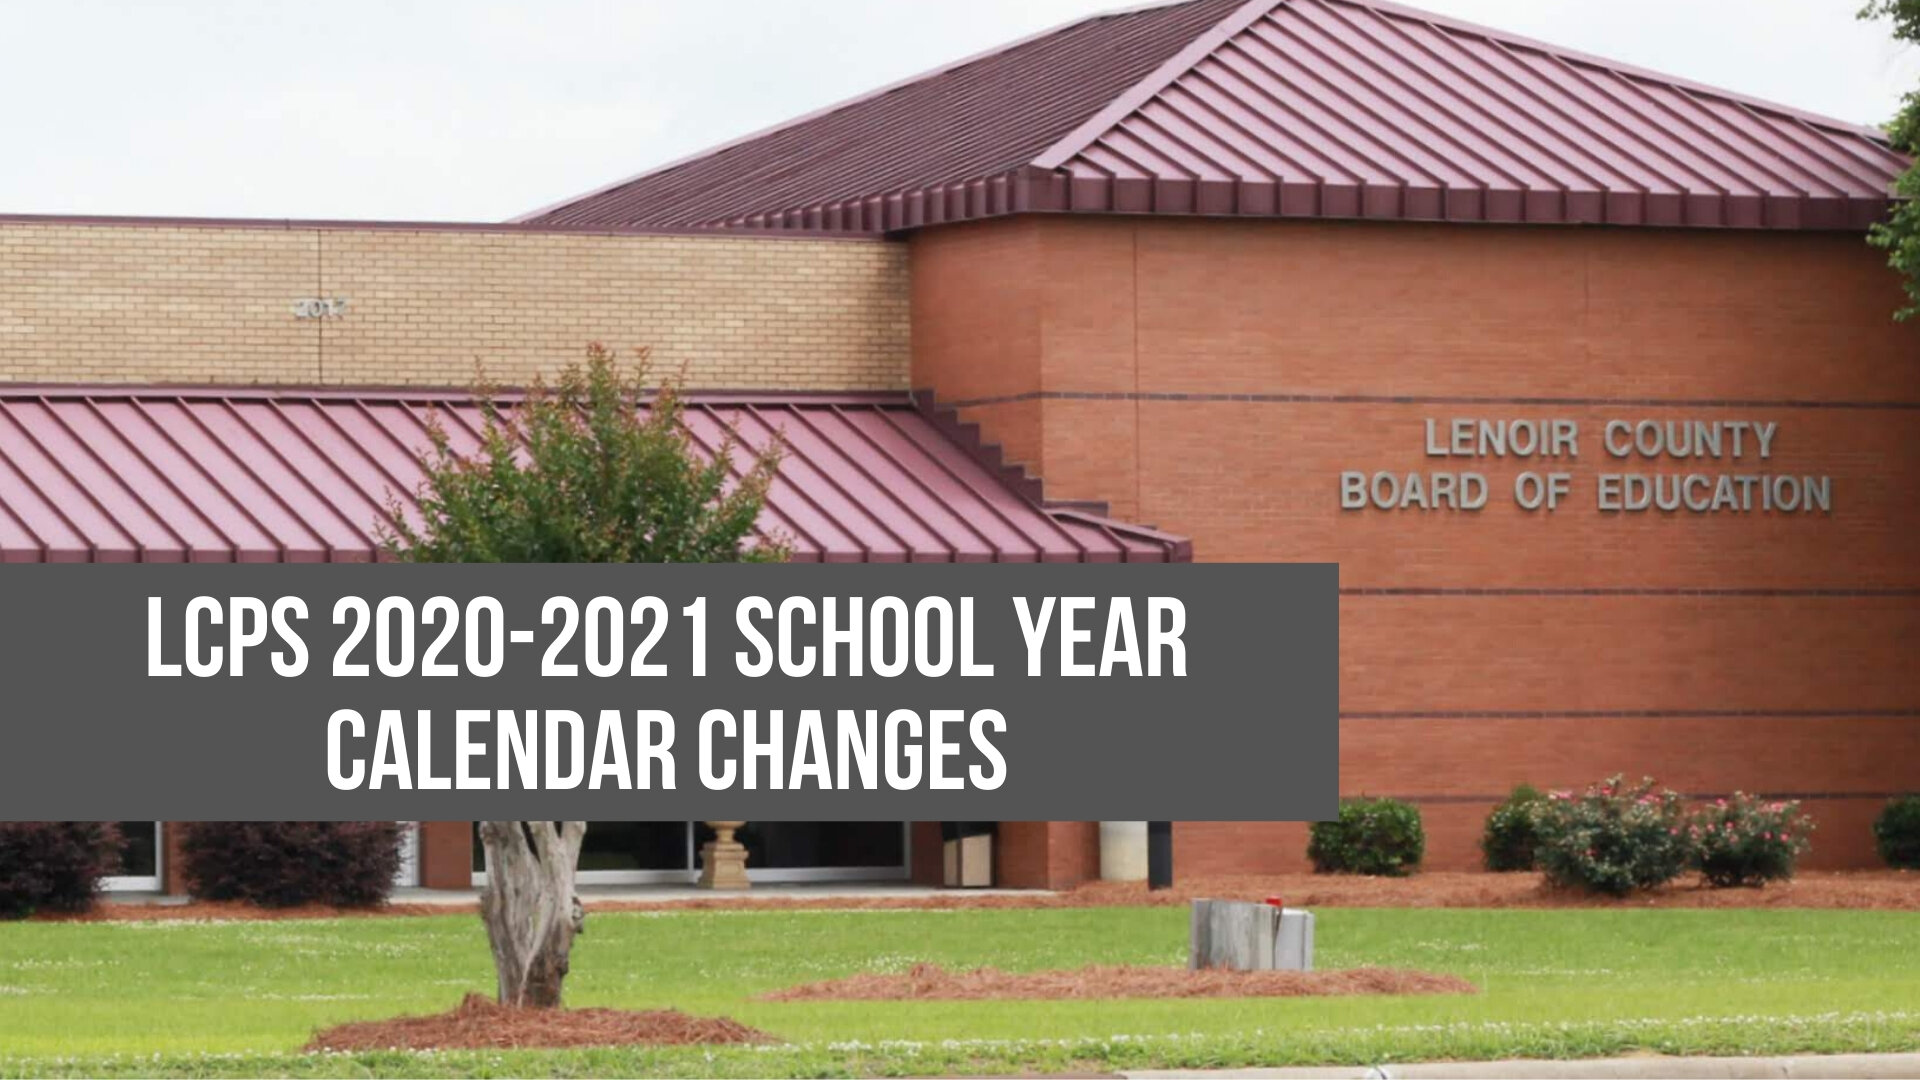 lcps 2021 calendar Lcps 2020 2021 School Year Calendar Changes Neuse News lcps 2021 calendar